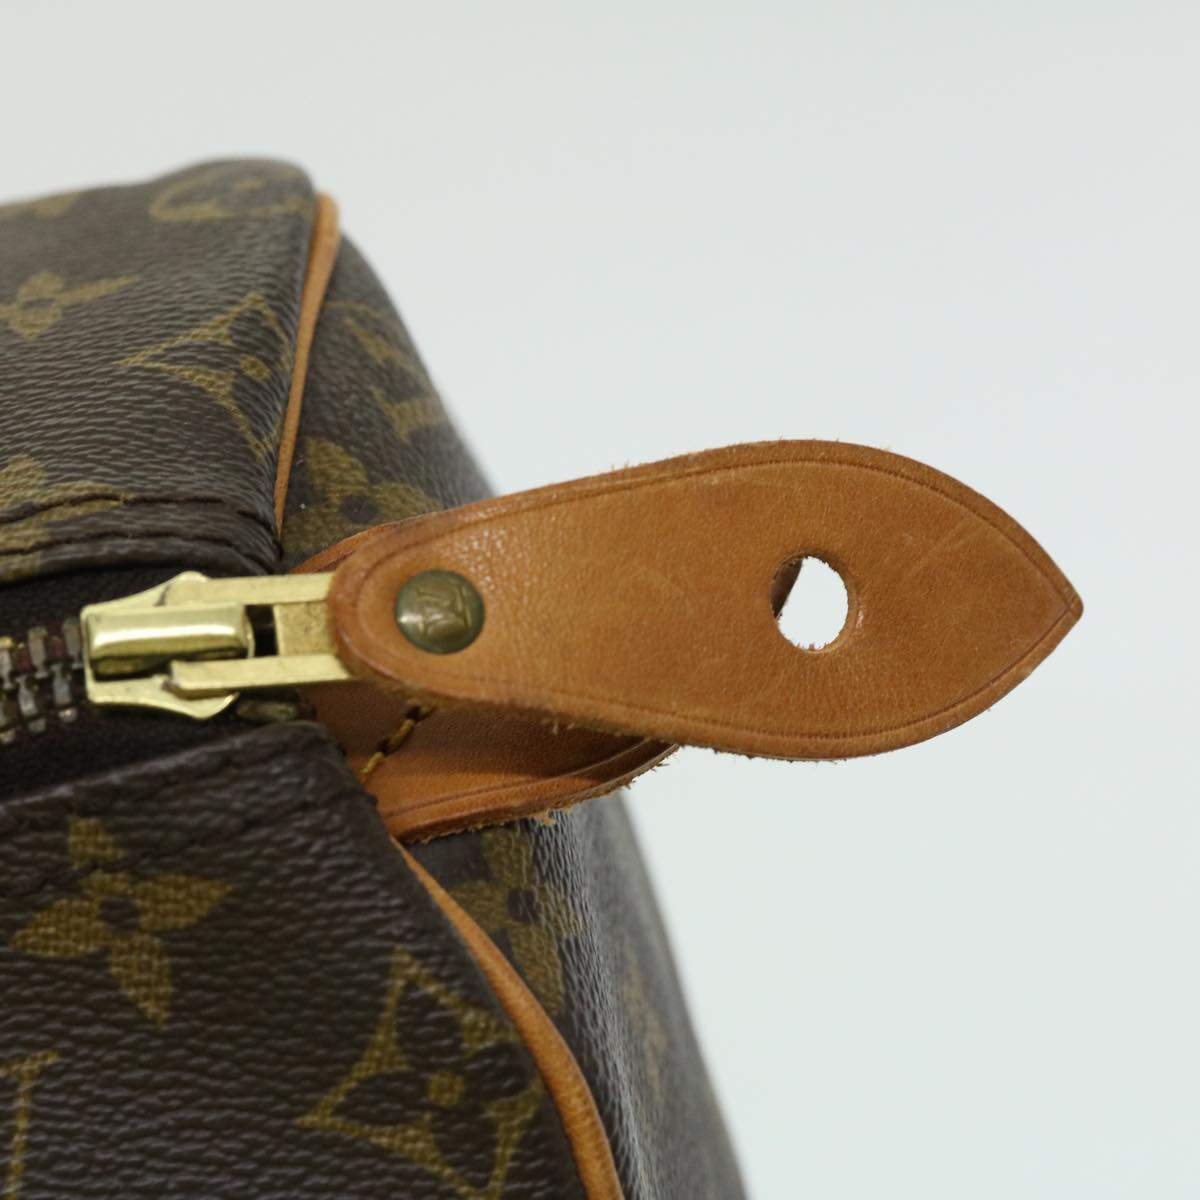 100% auth Louis Vuitton Speedy 25! New zipper pull